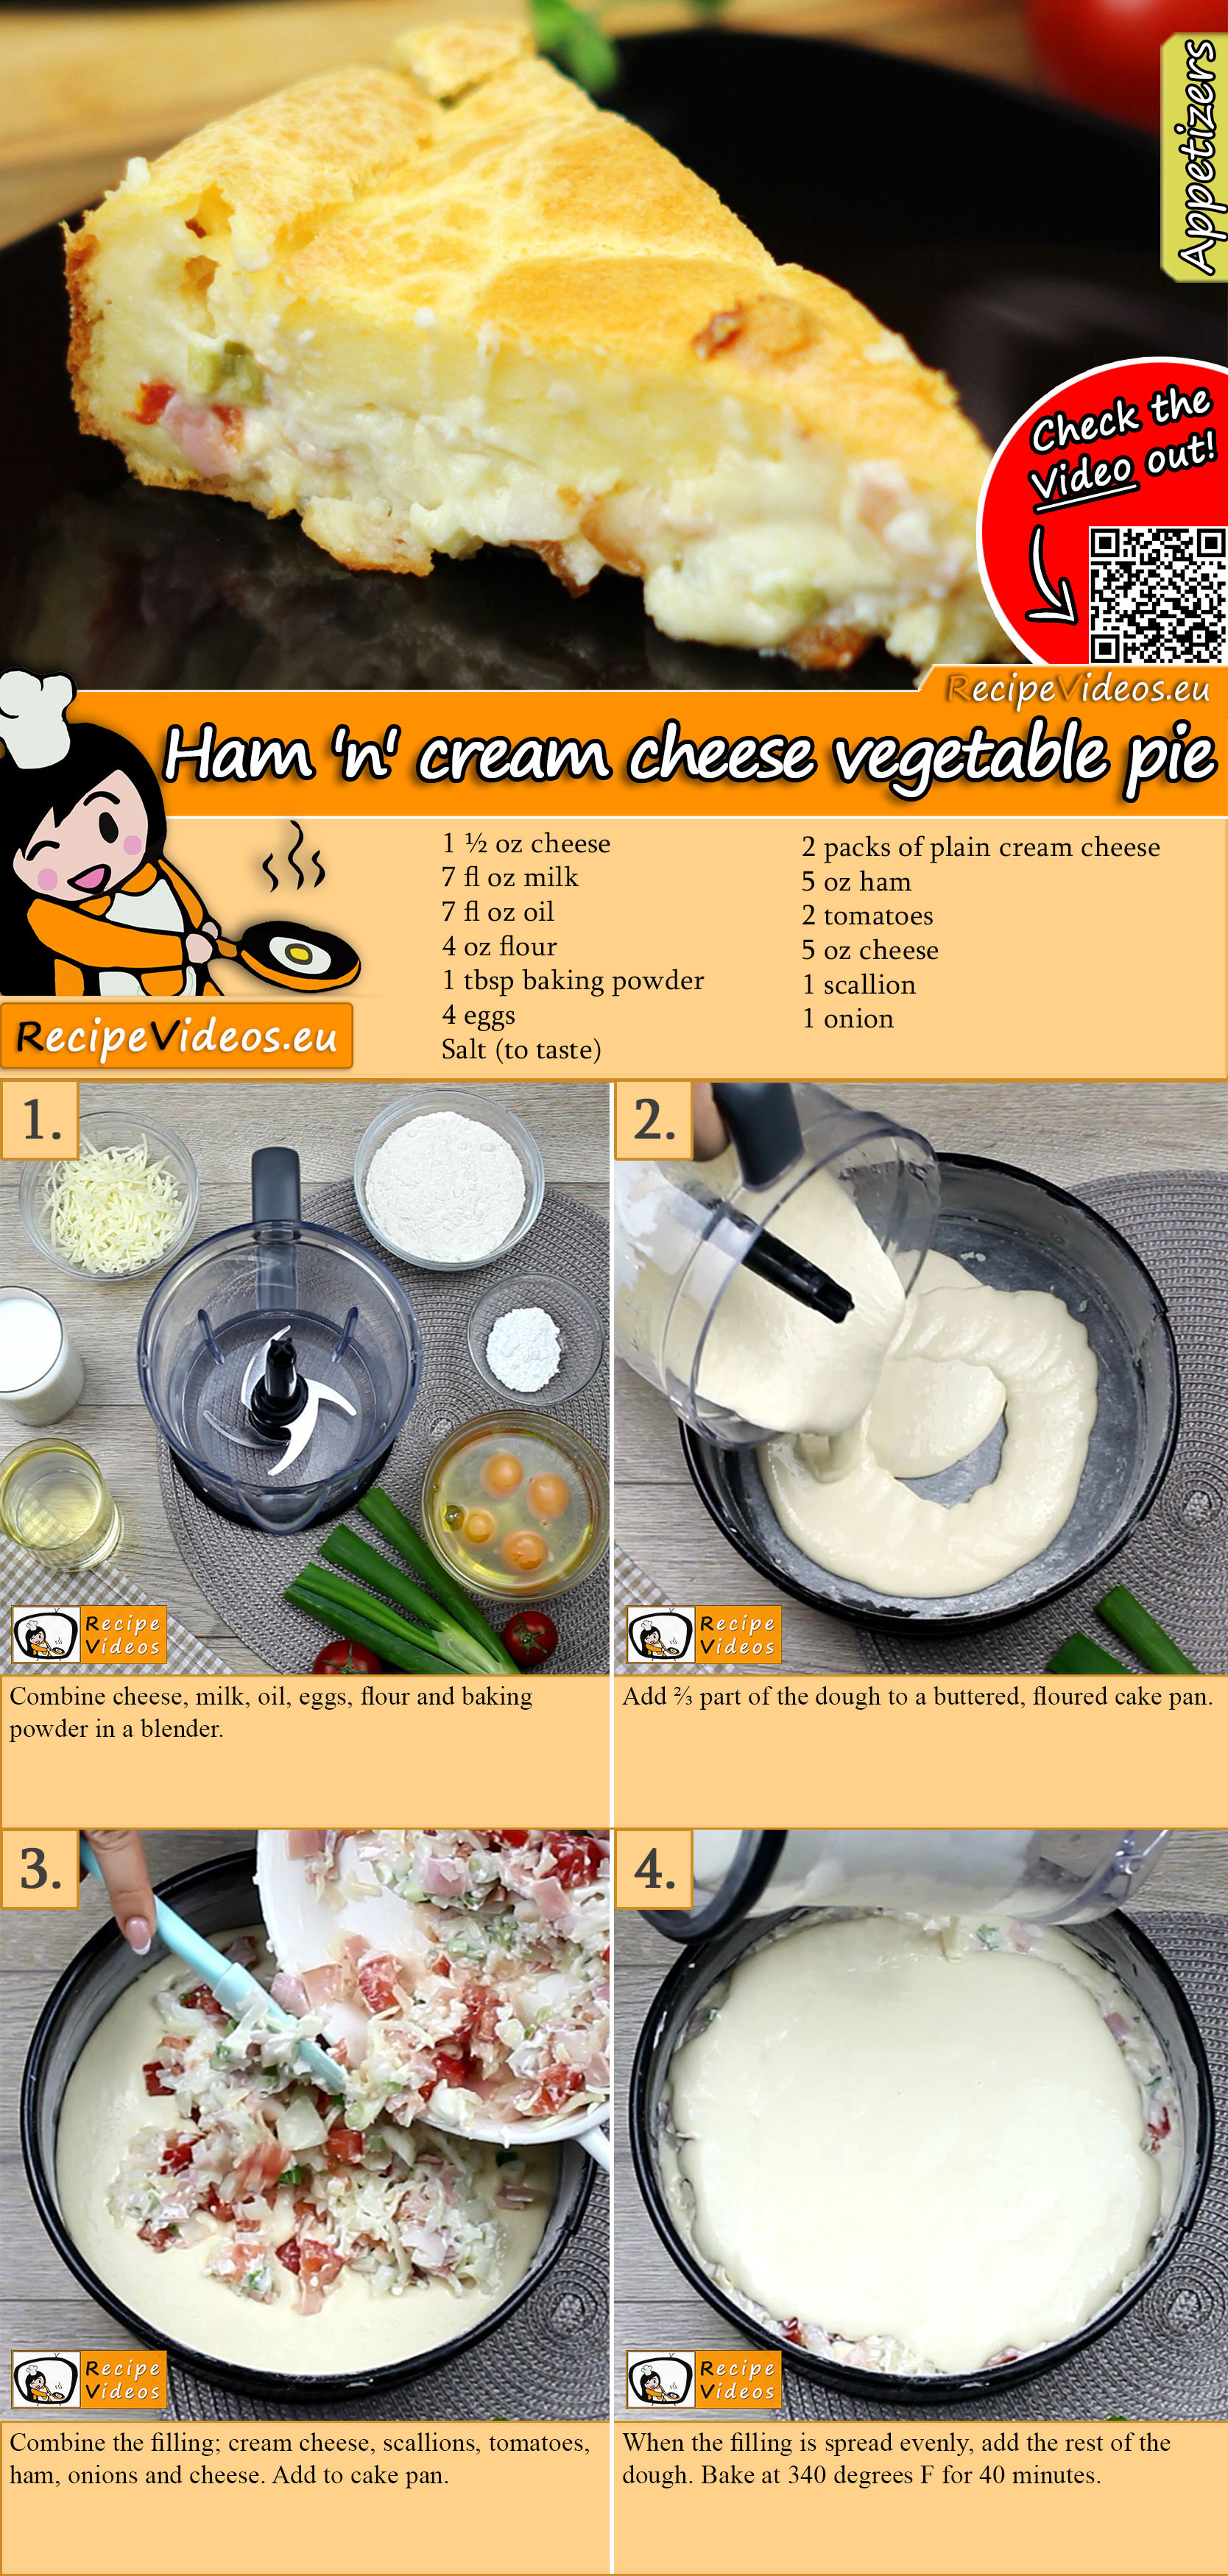 Ham ‘n’ cream cheese vegetable pie recipe with video